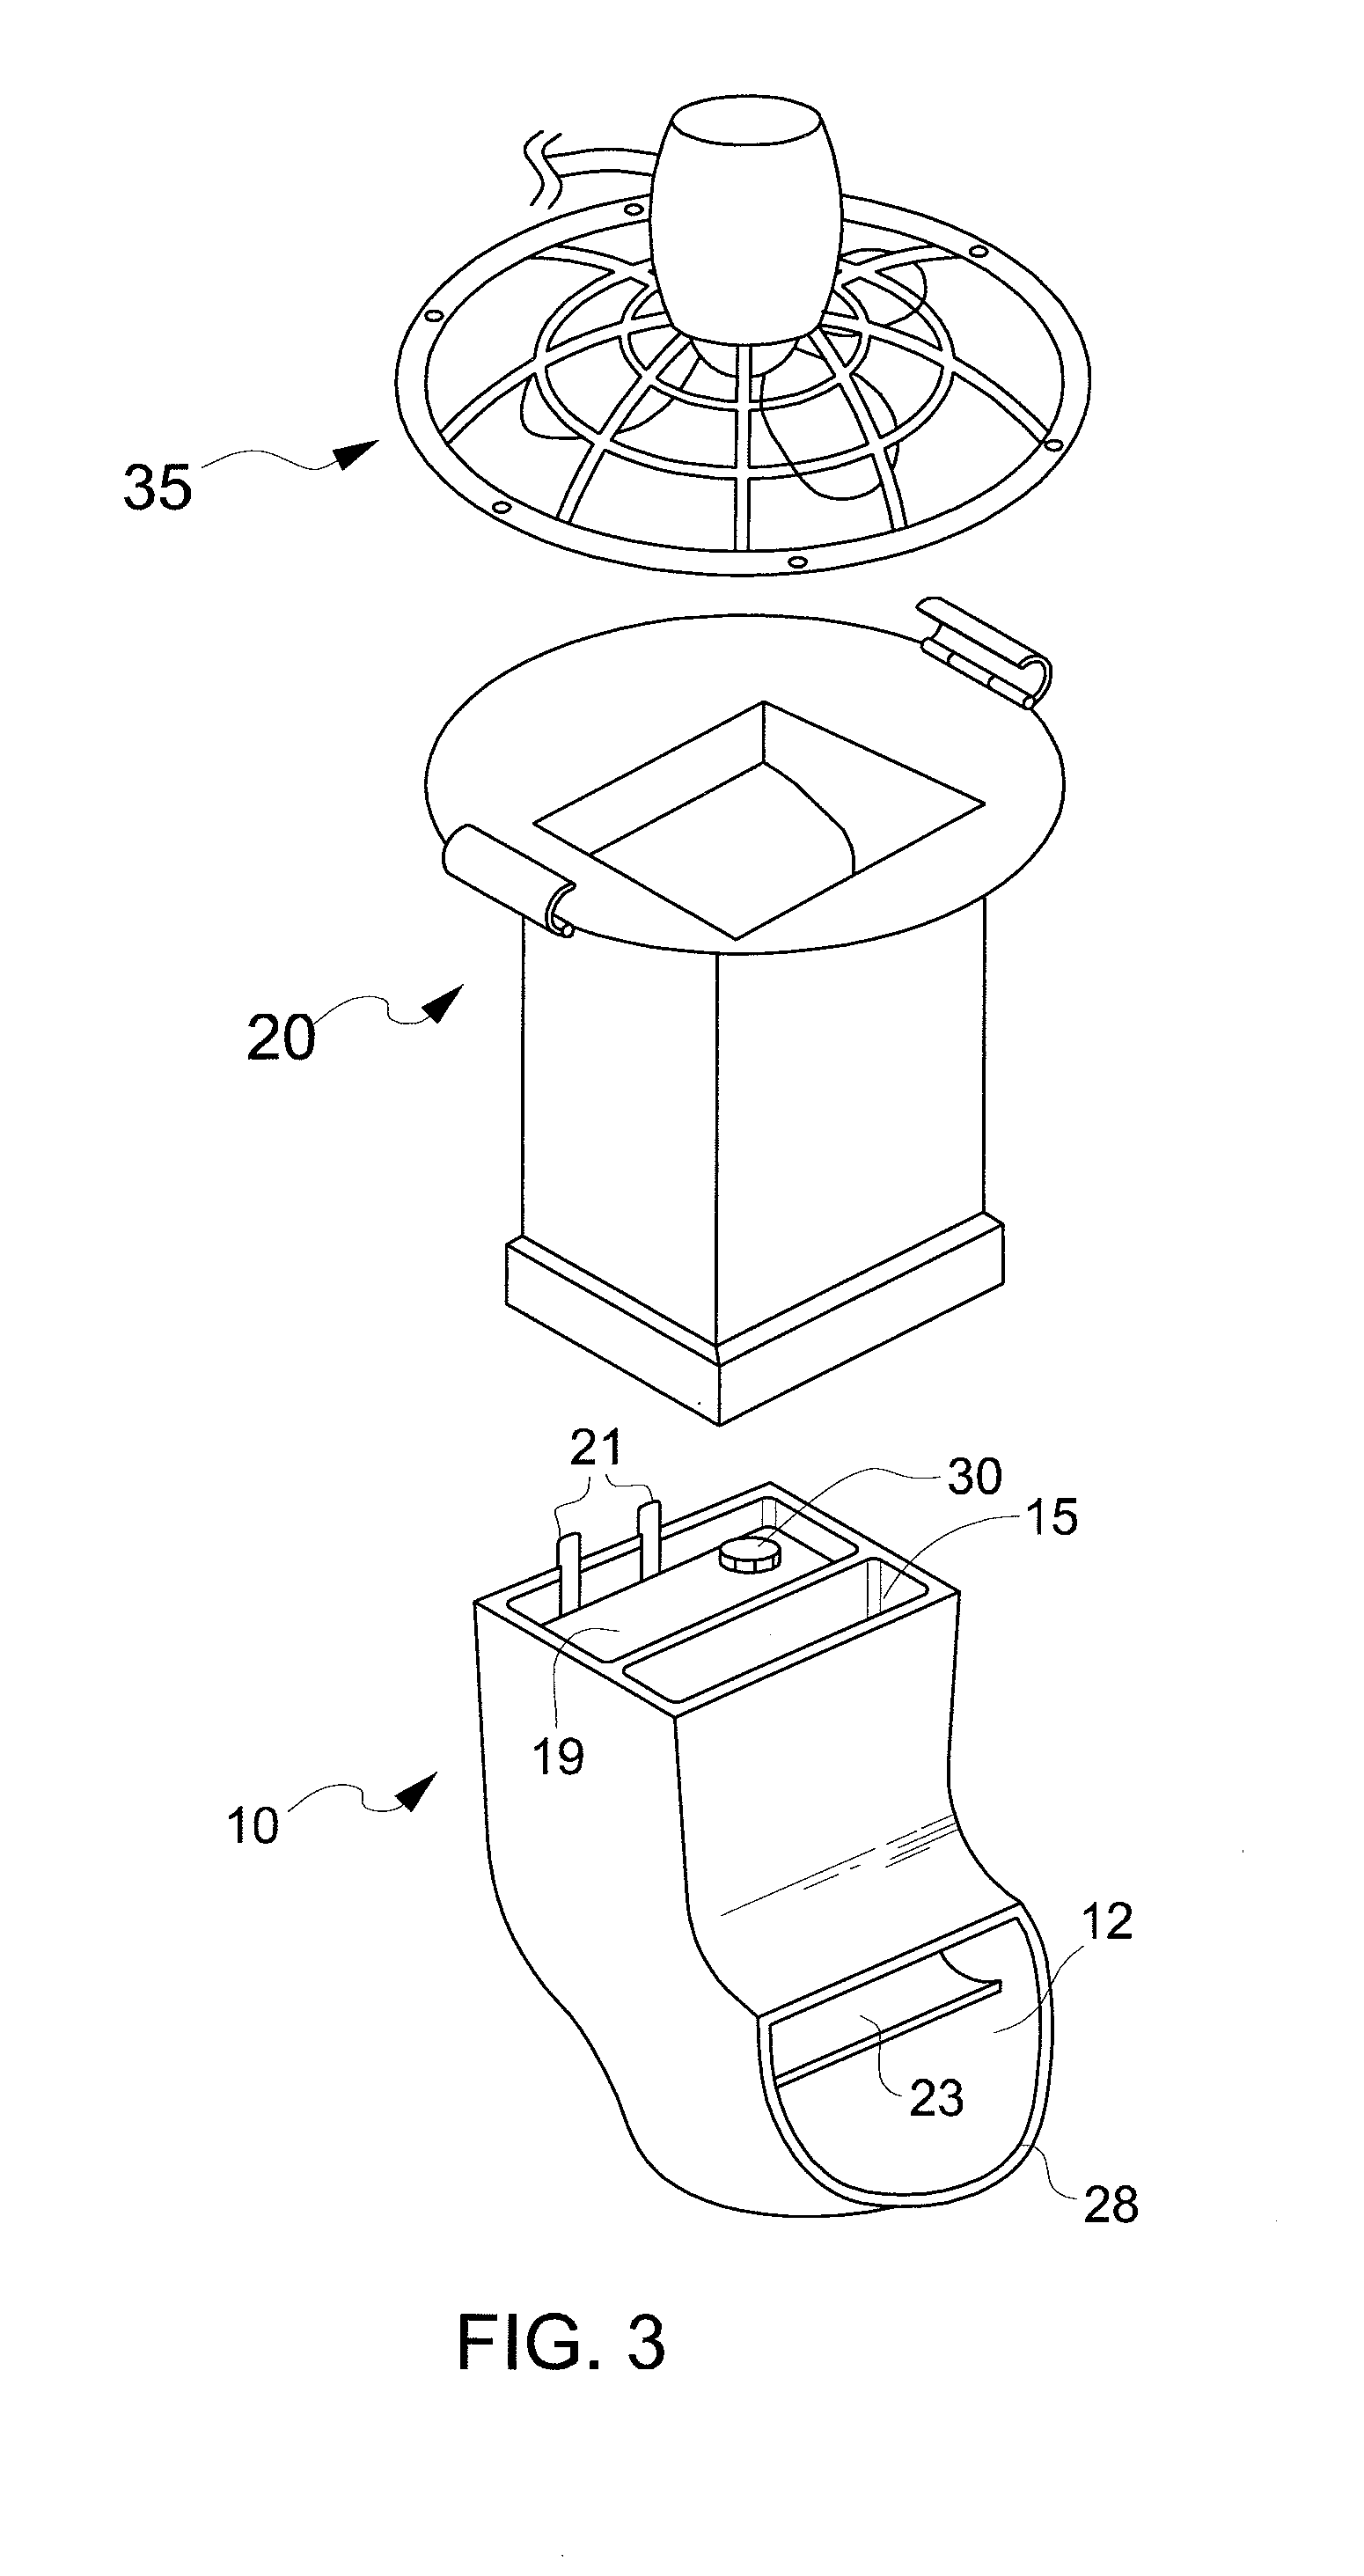 Personal evaporative cooling apparatus